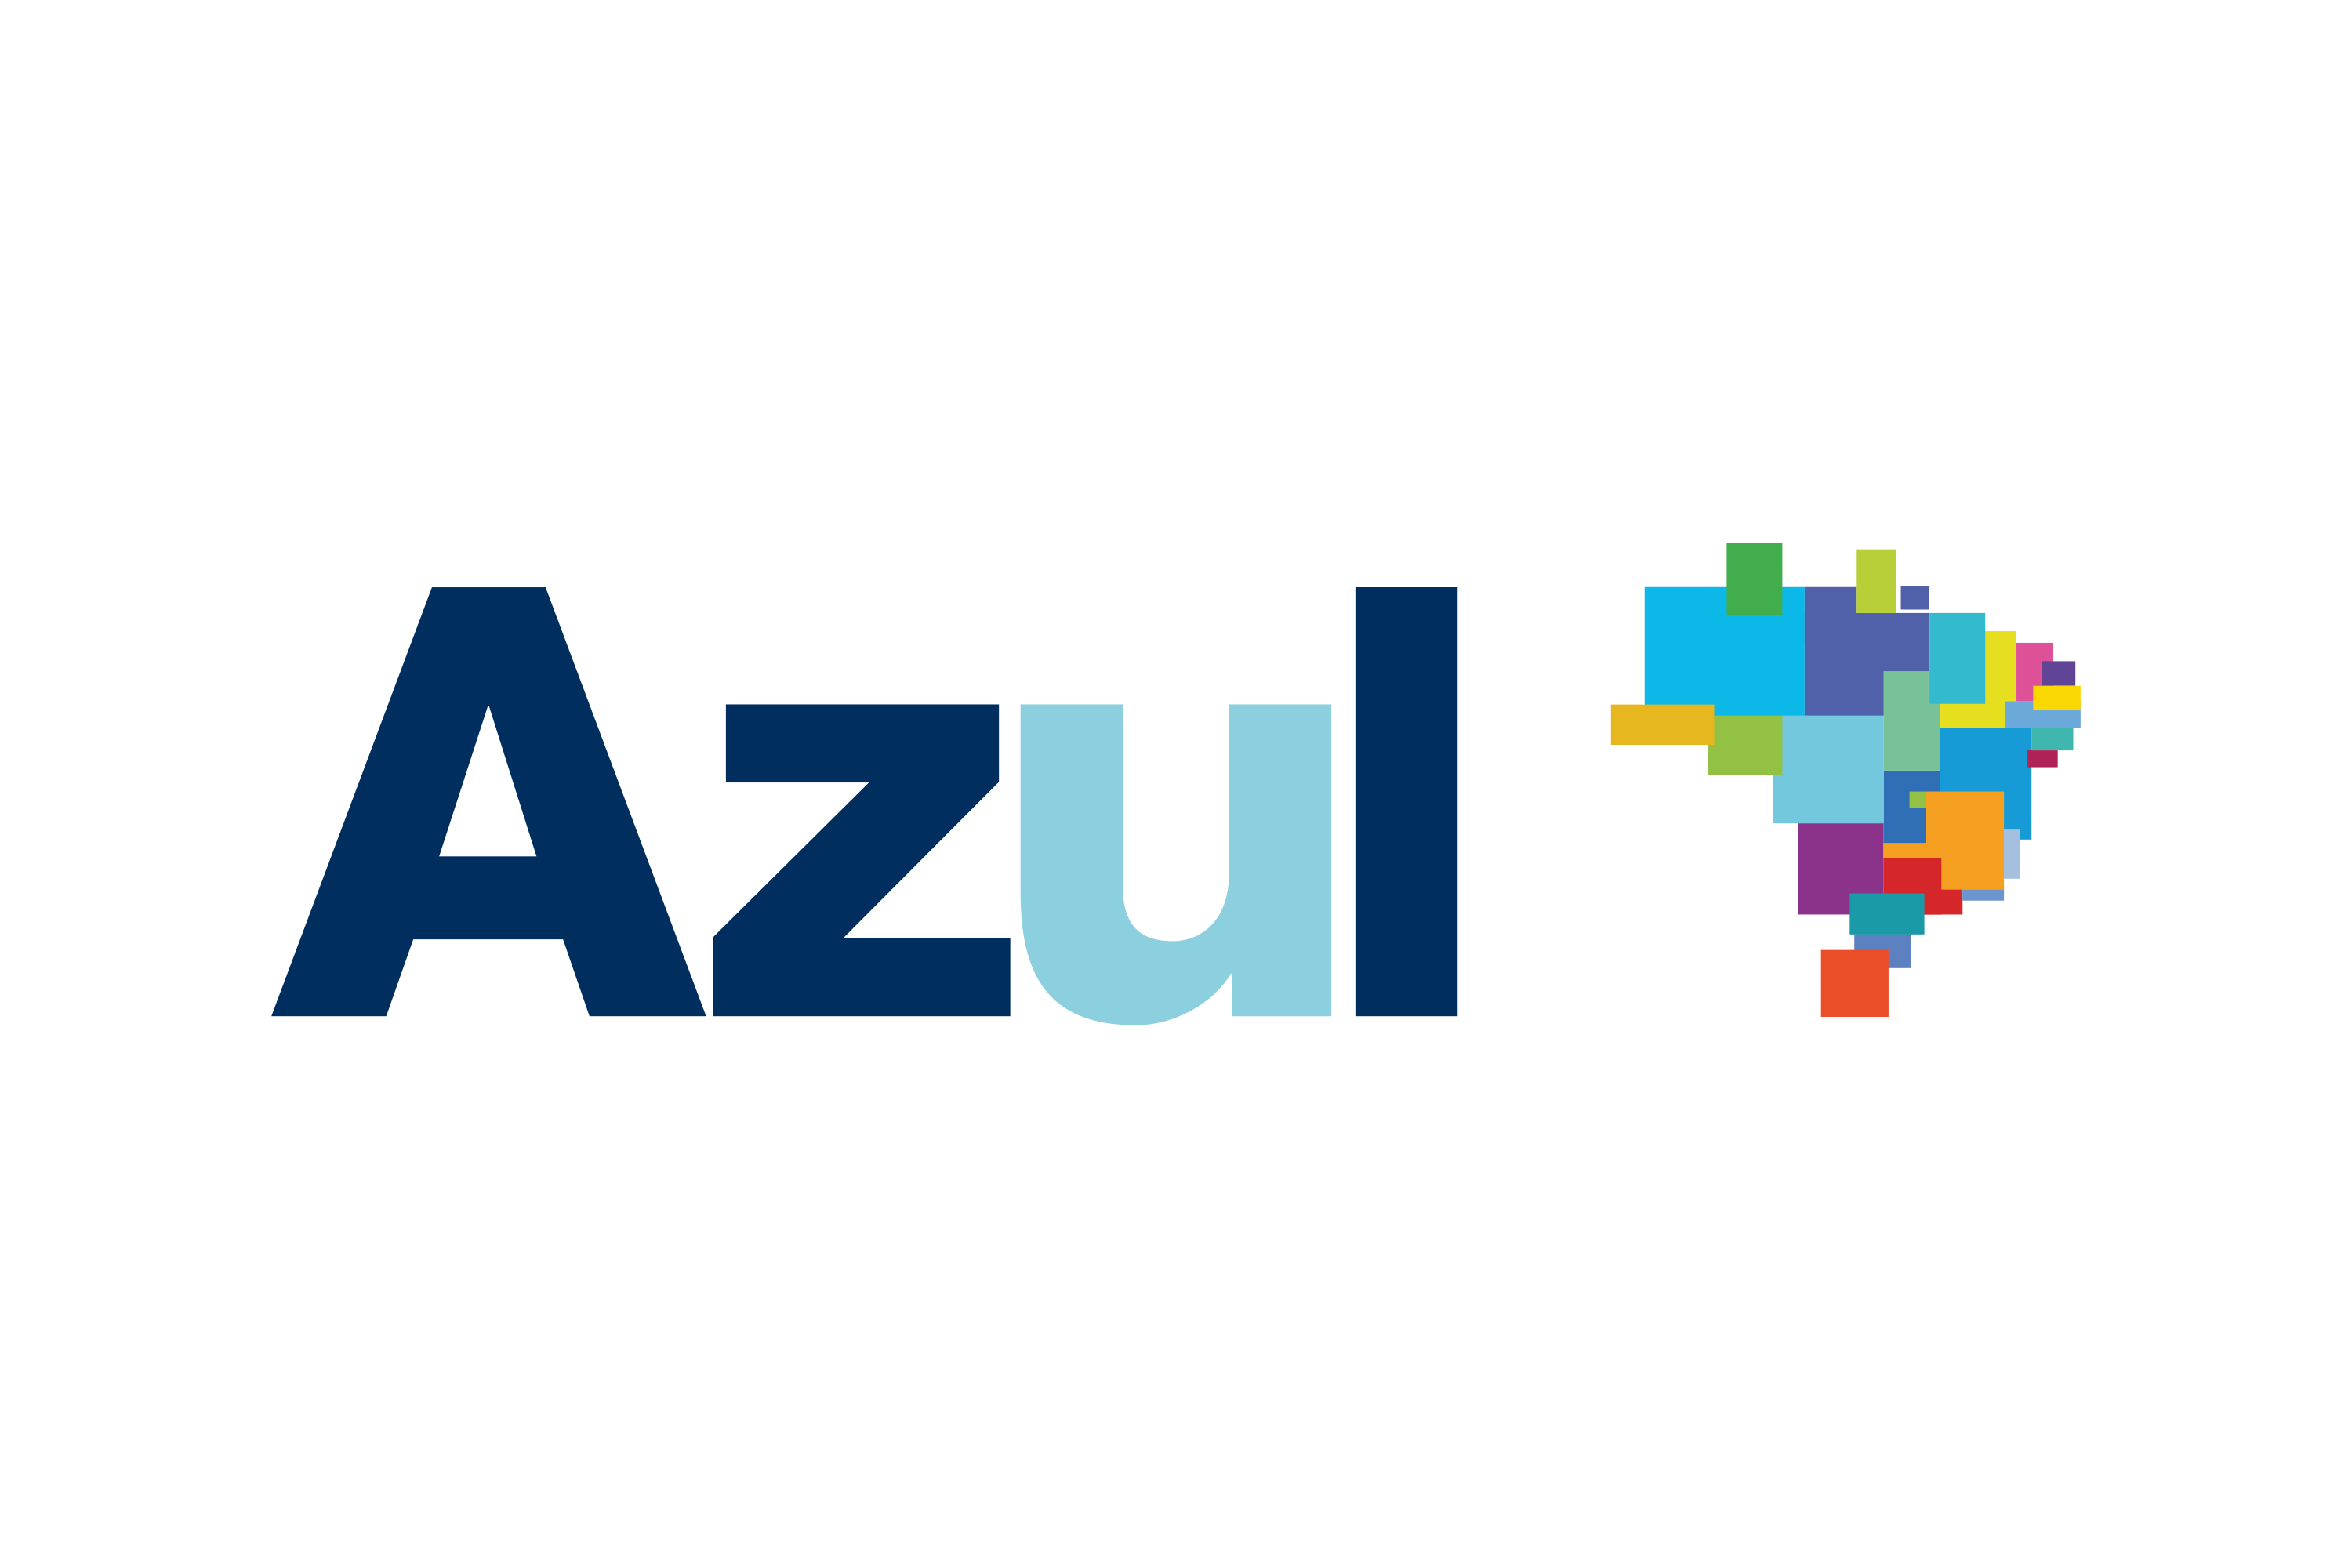 Download Azul Brazilian Airlines (Azul Linhas Aéreas Brasileiras S/A) Logo  in SVG Vector or PNG File Format - Logo.wine